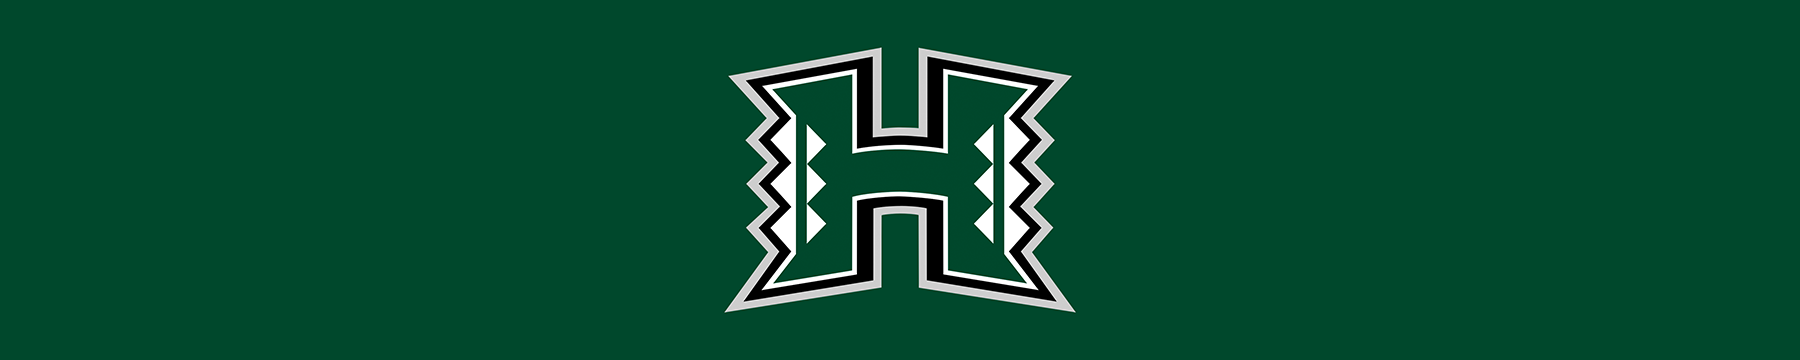 University Of Hawaii